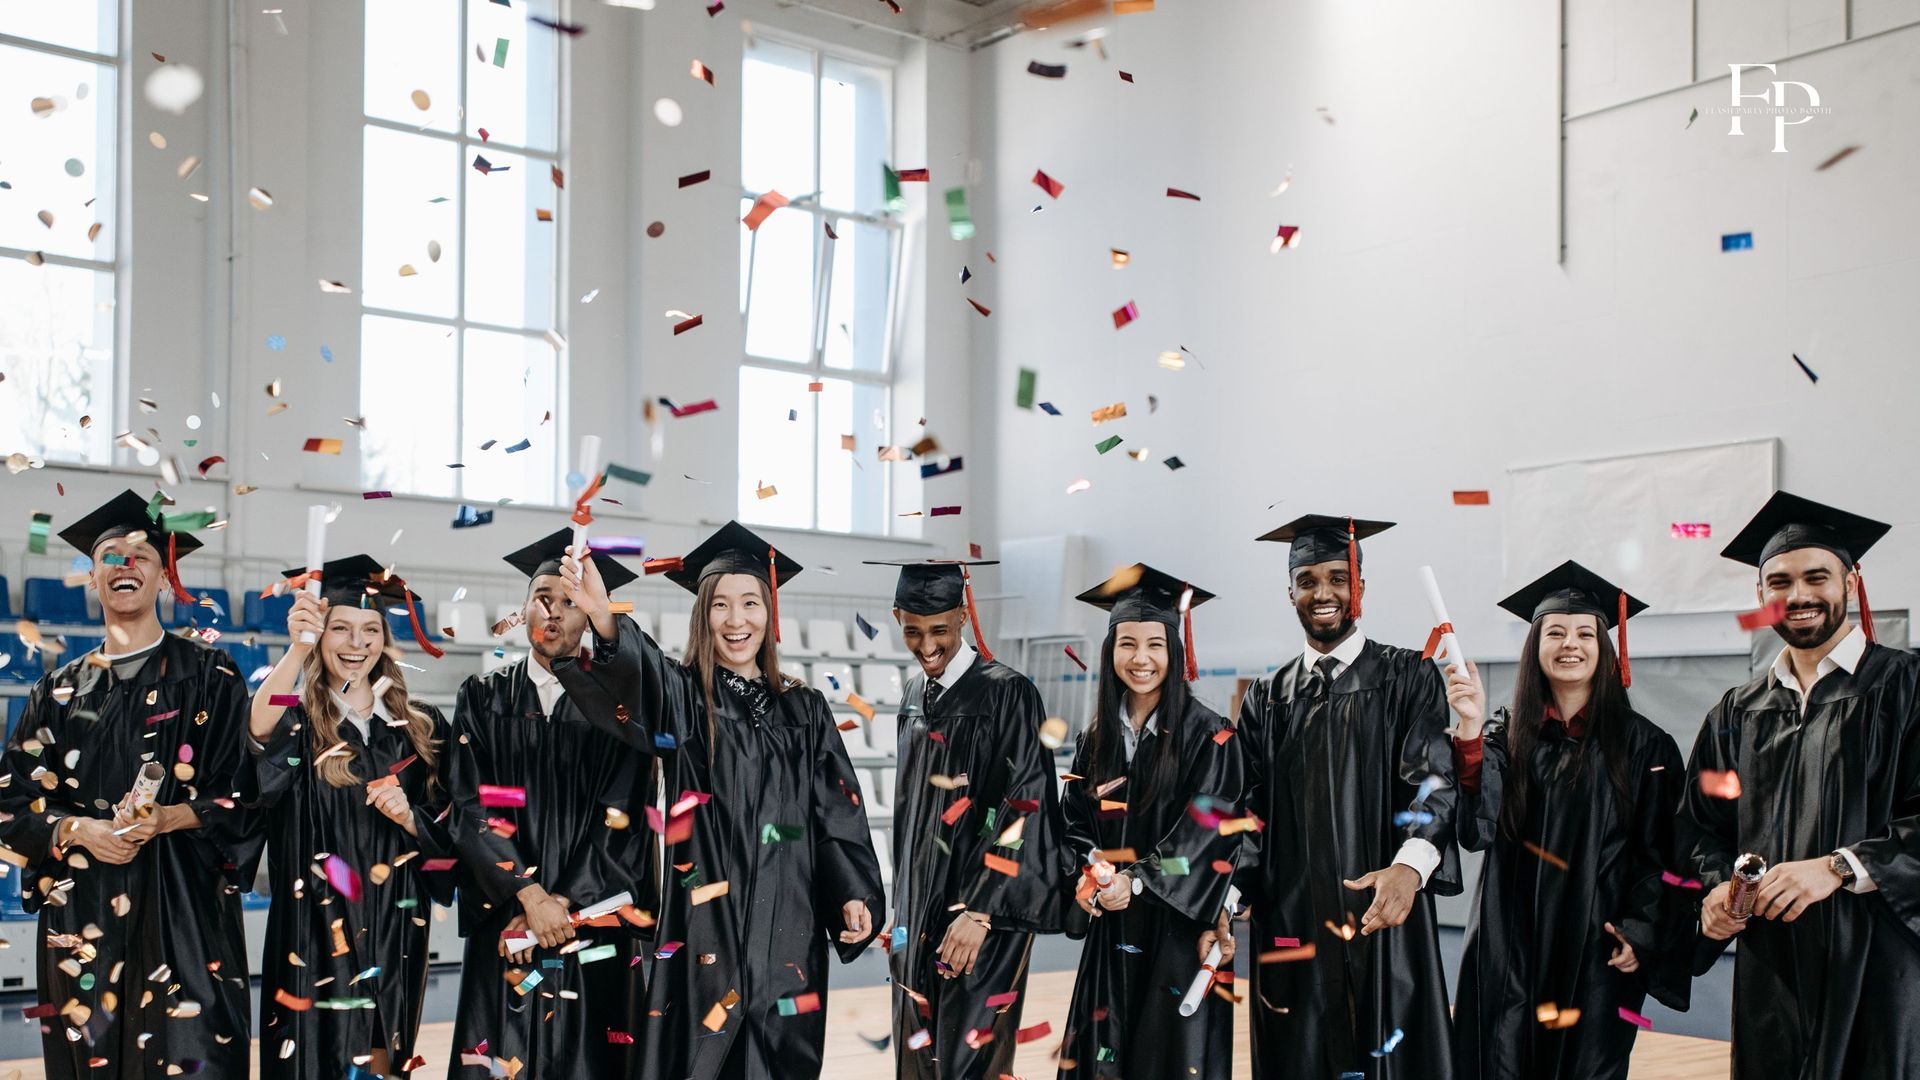 Diplomas in hand, Atlanta graduates celebrate their academic achievements.